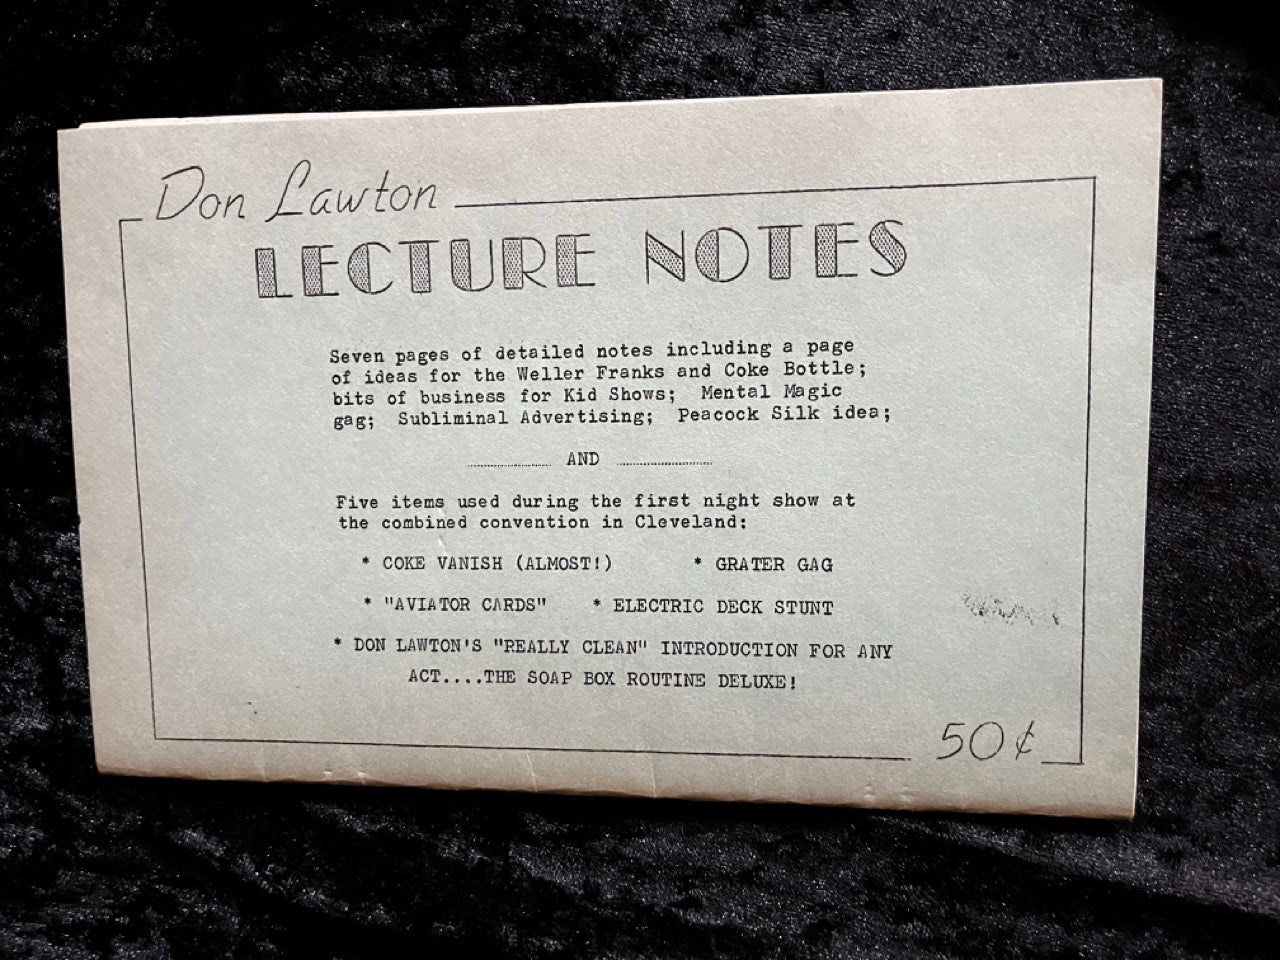 Lawton Lecture Notes - Don Lawton